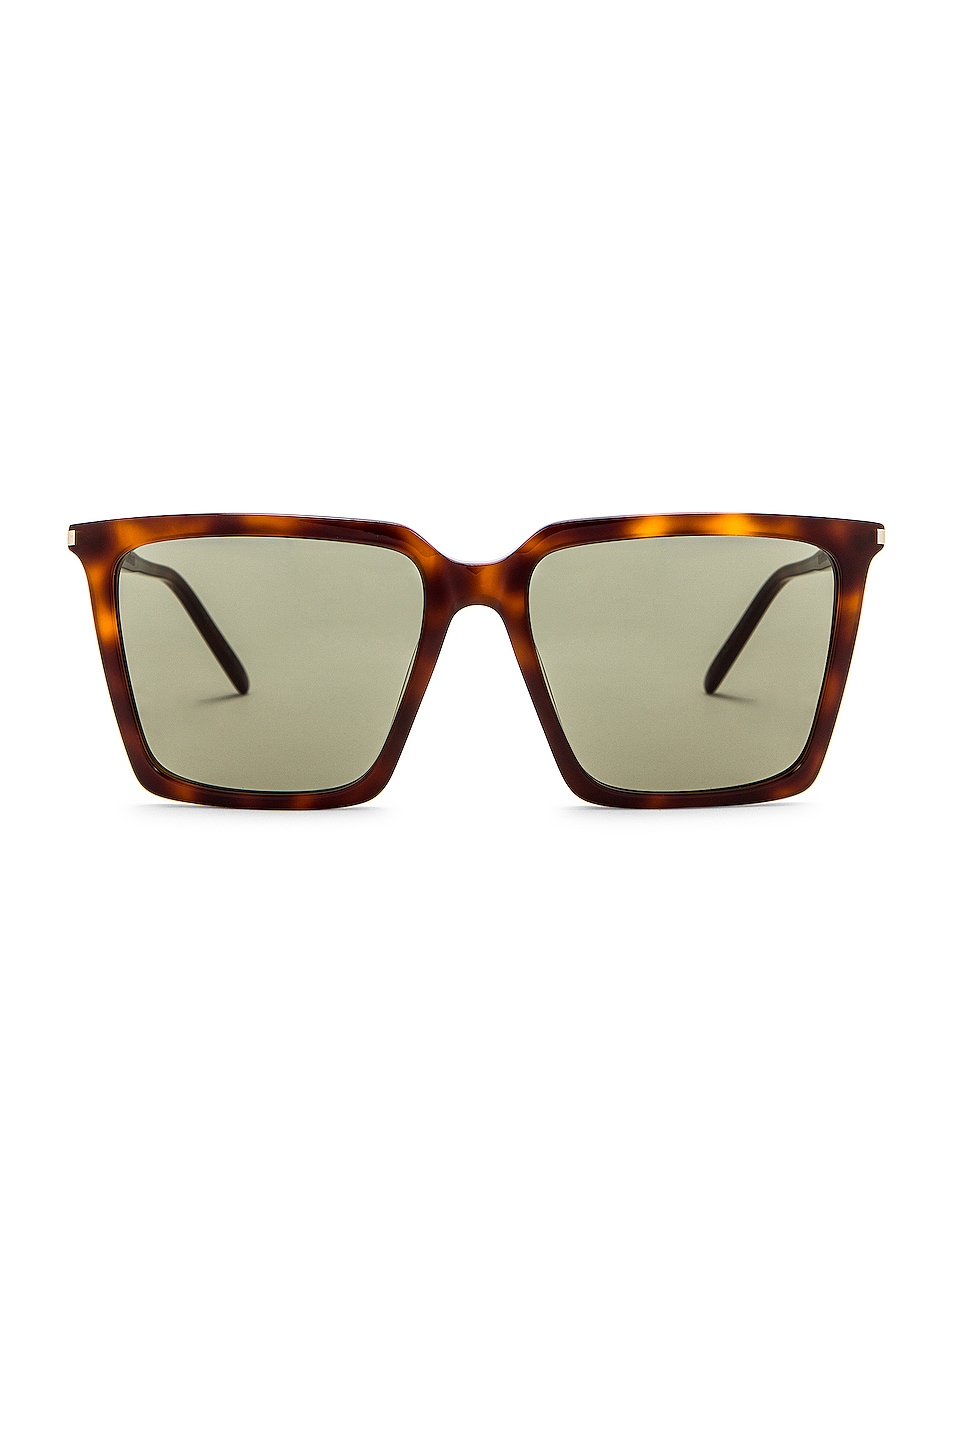 Saint Laurent SL 474 Sunglasses in Brown